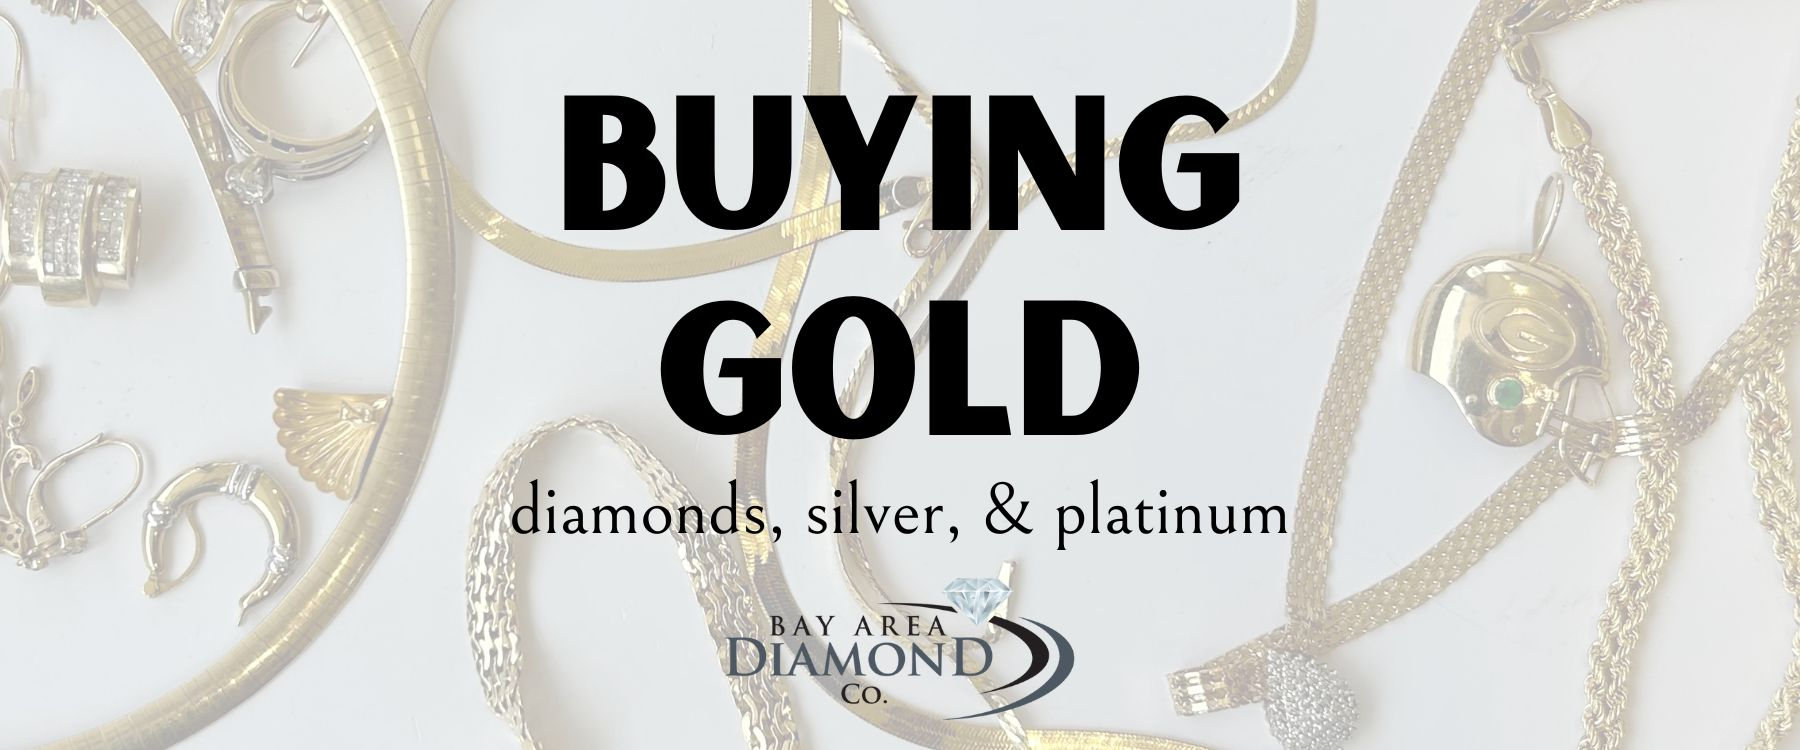 We buy gold, diamonds, silver, & platinum!  Bay Area Diamond Company Green Bay, WI